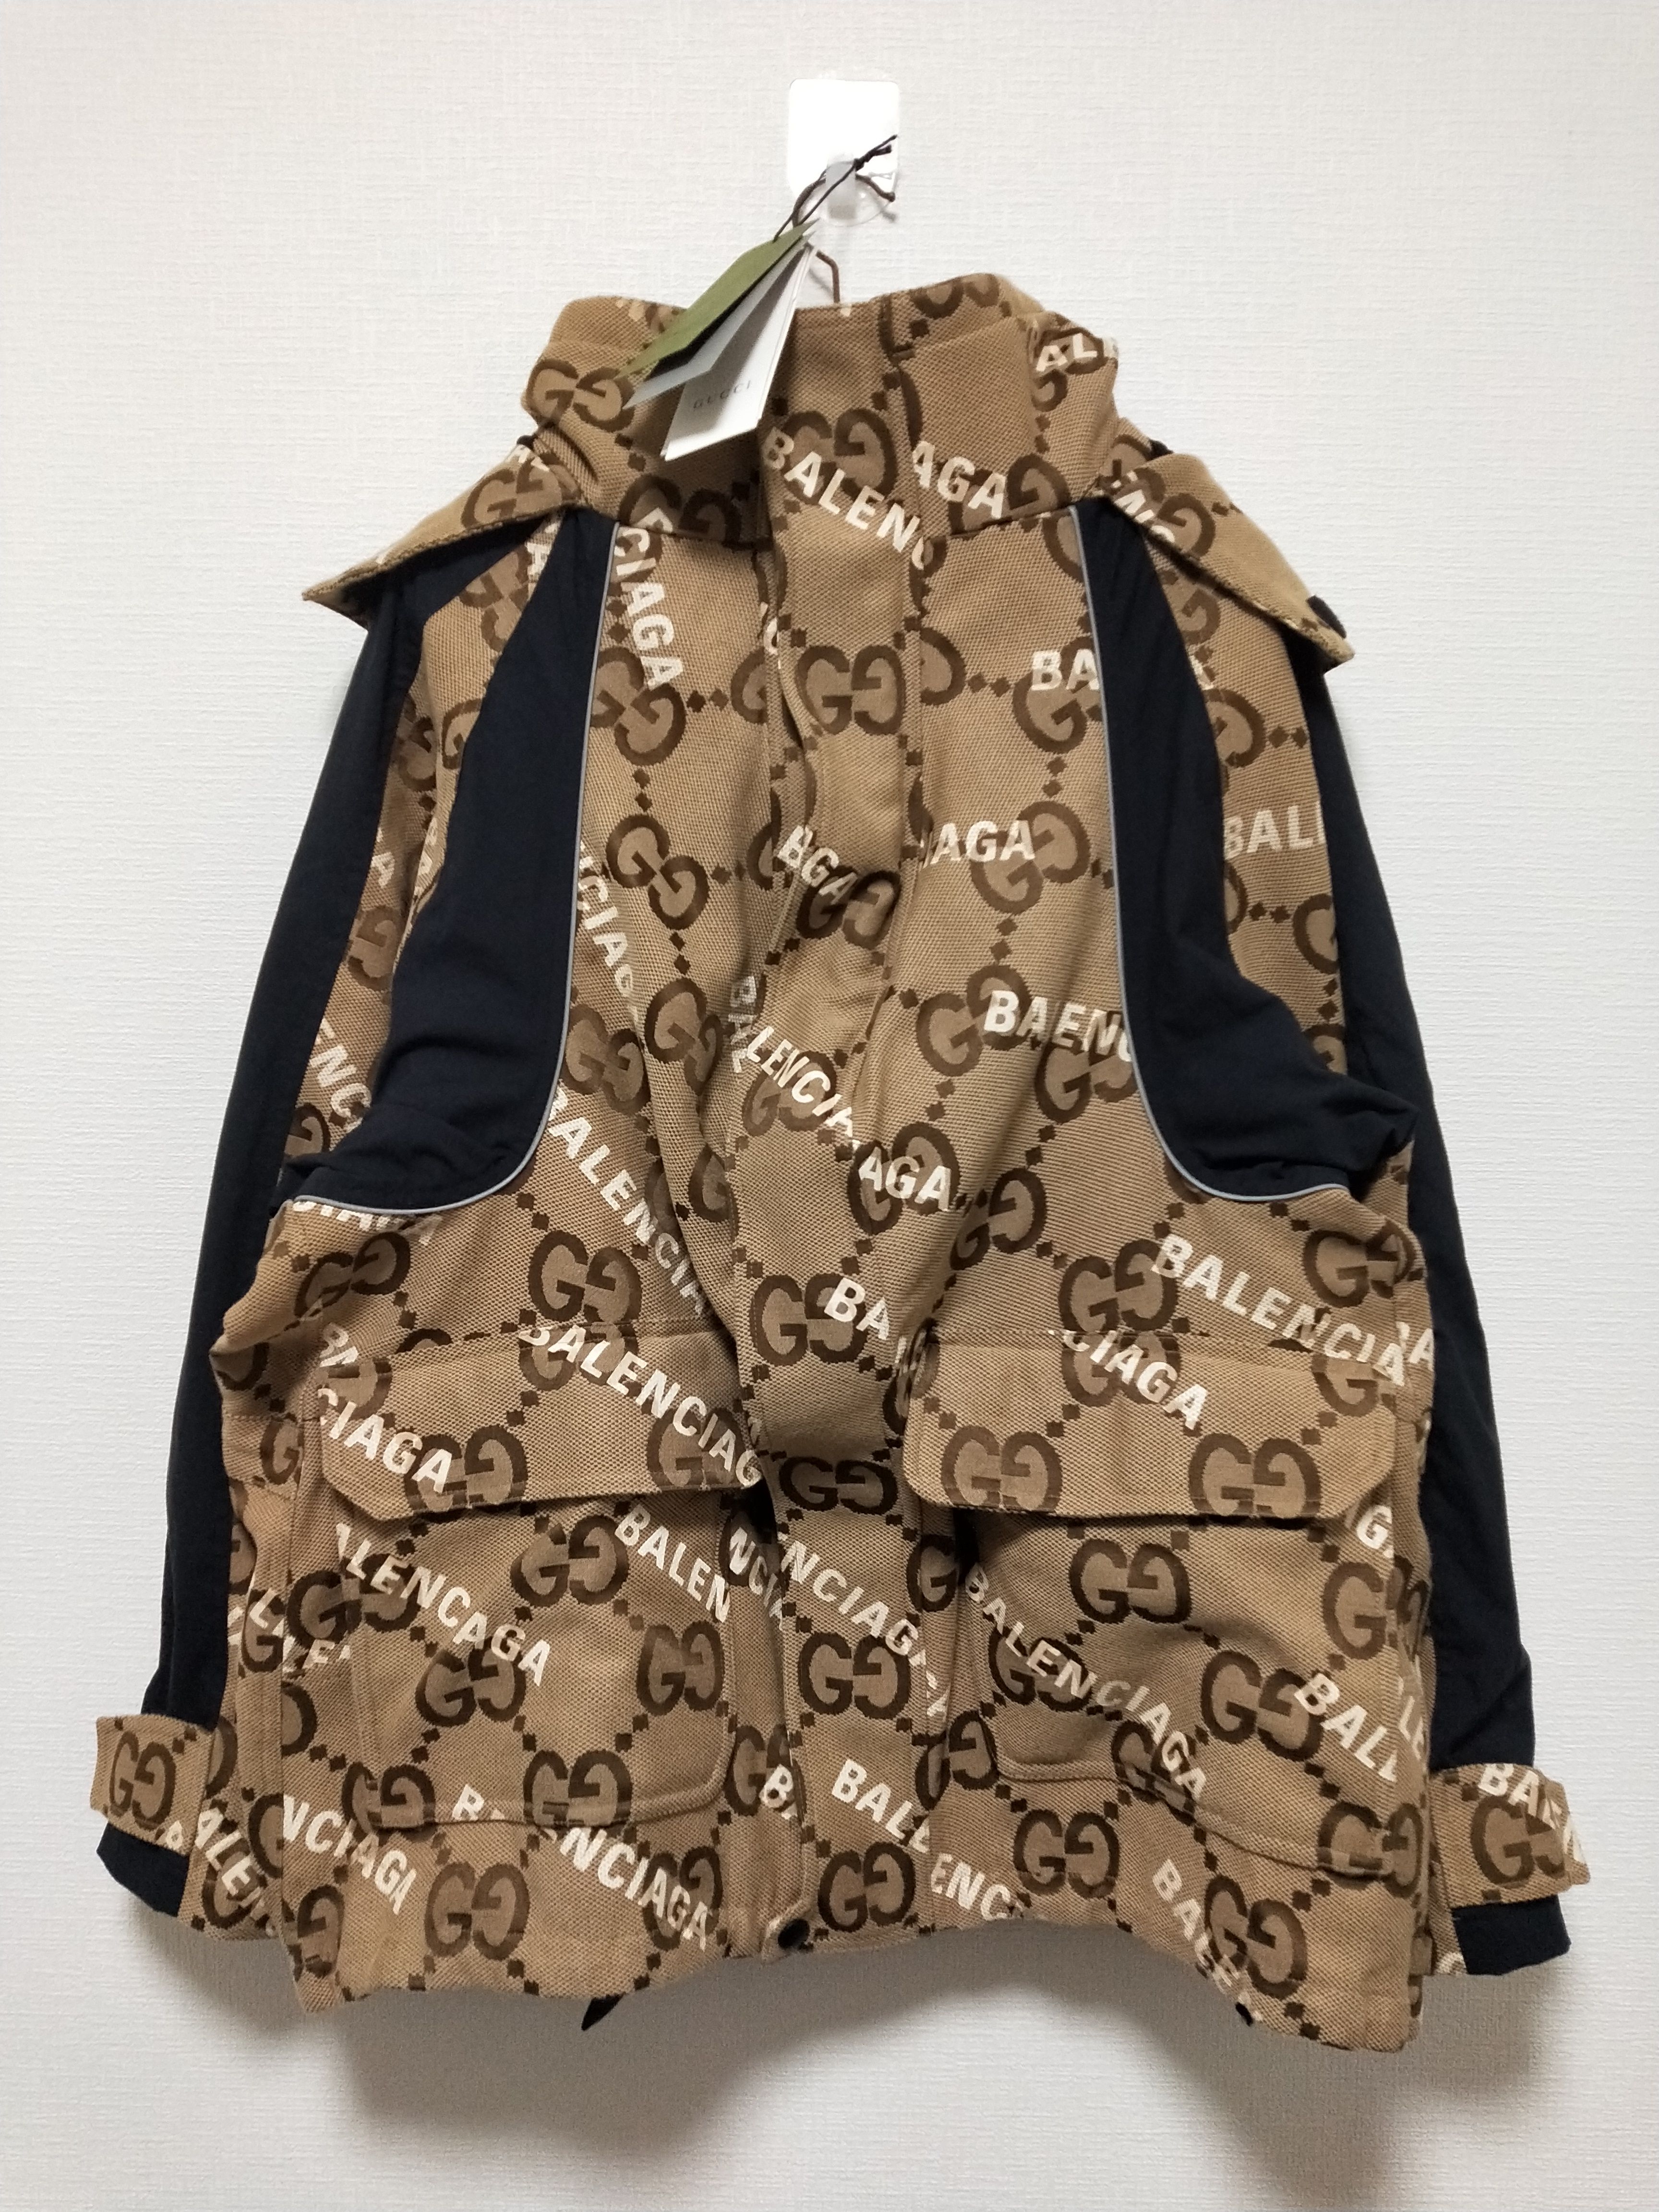 Gucci Balenciaga Jumbo GG Jacket Trench Coat The Hacker Project size 50 Med